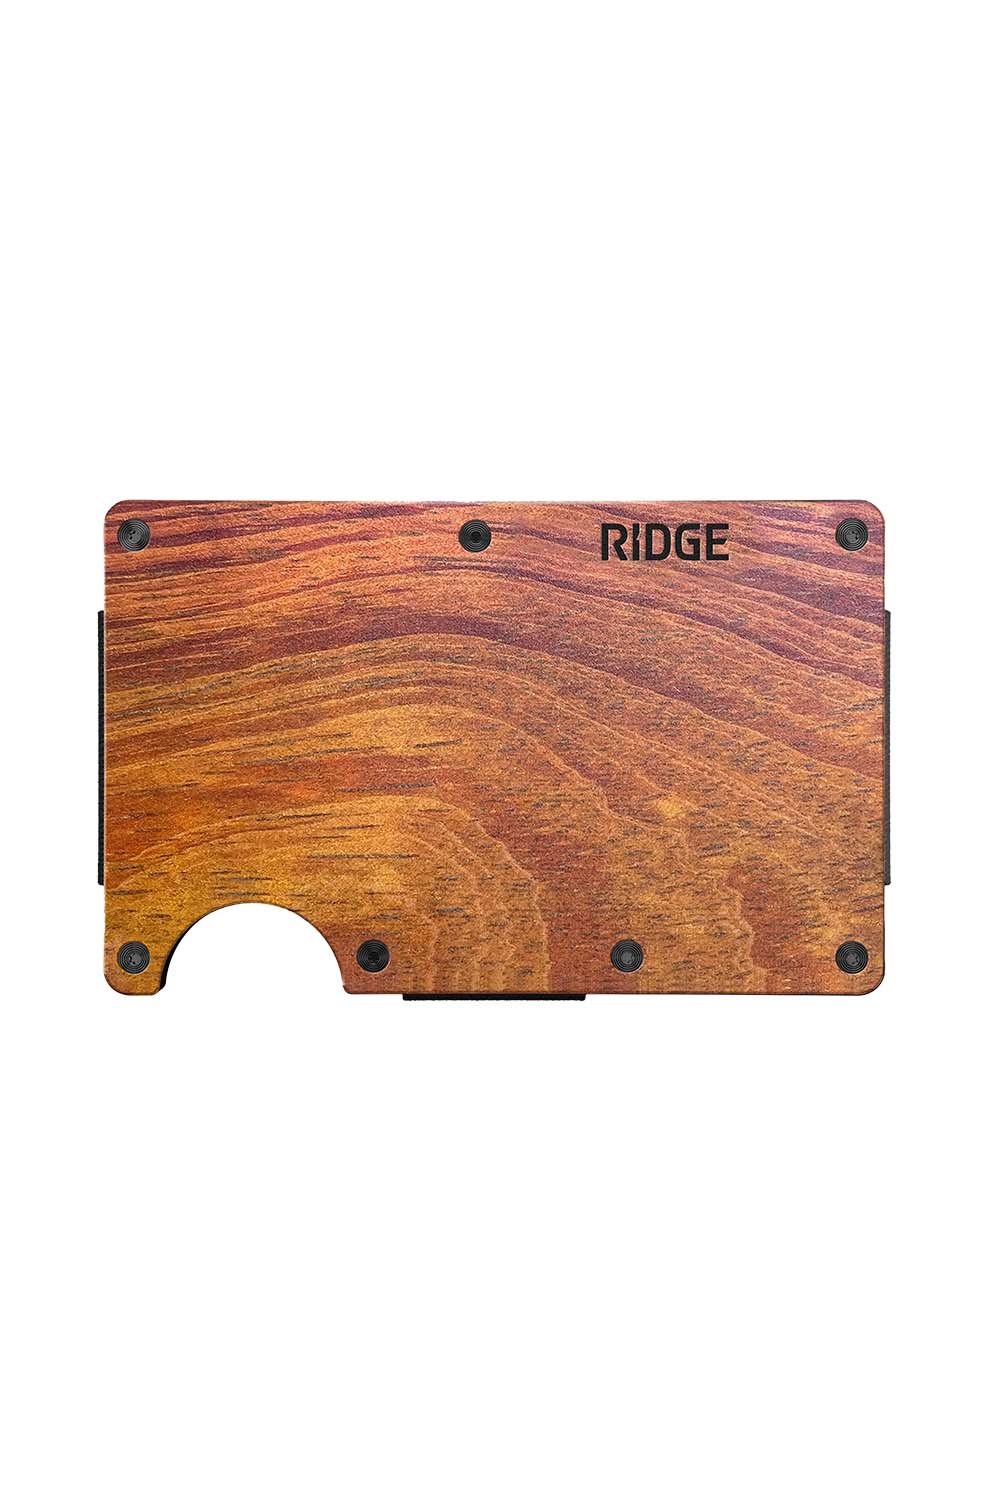 Ridge Wallet - Aluminum - Money Clip - Mopane Wood - Back